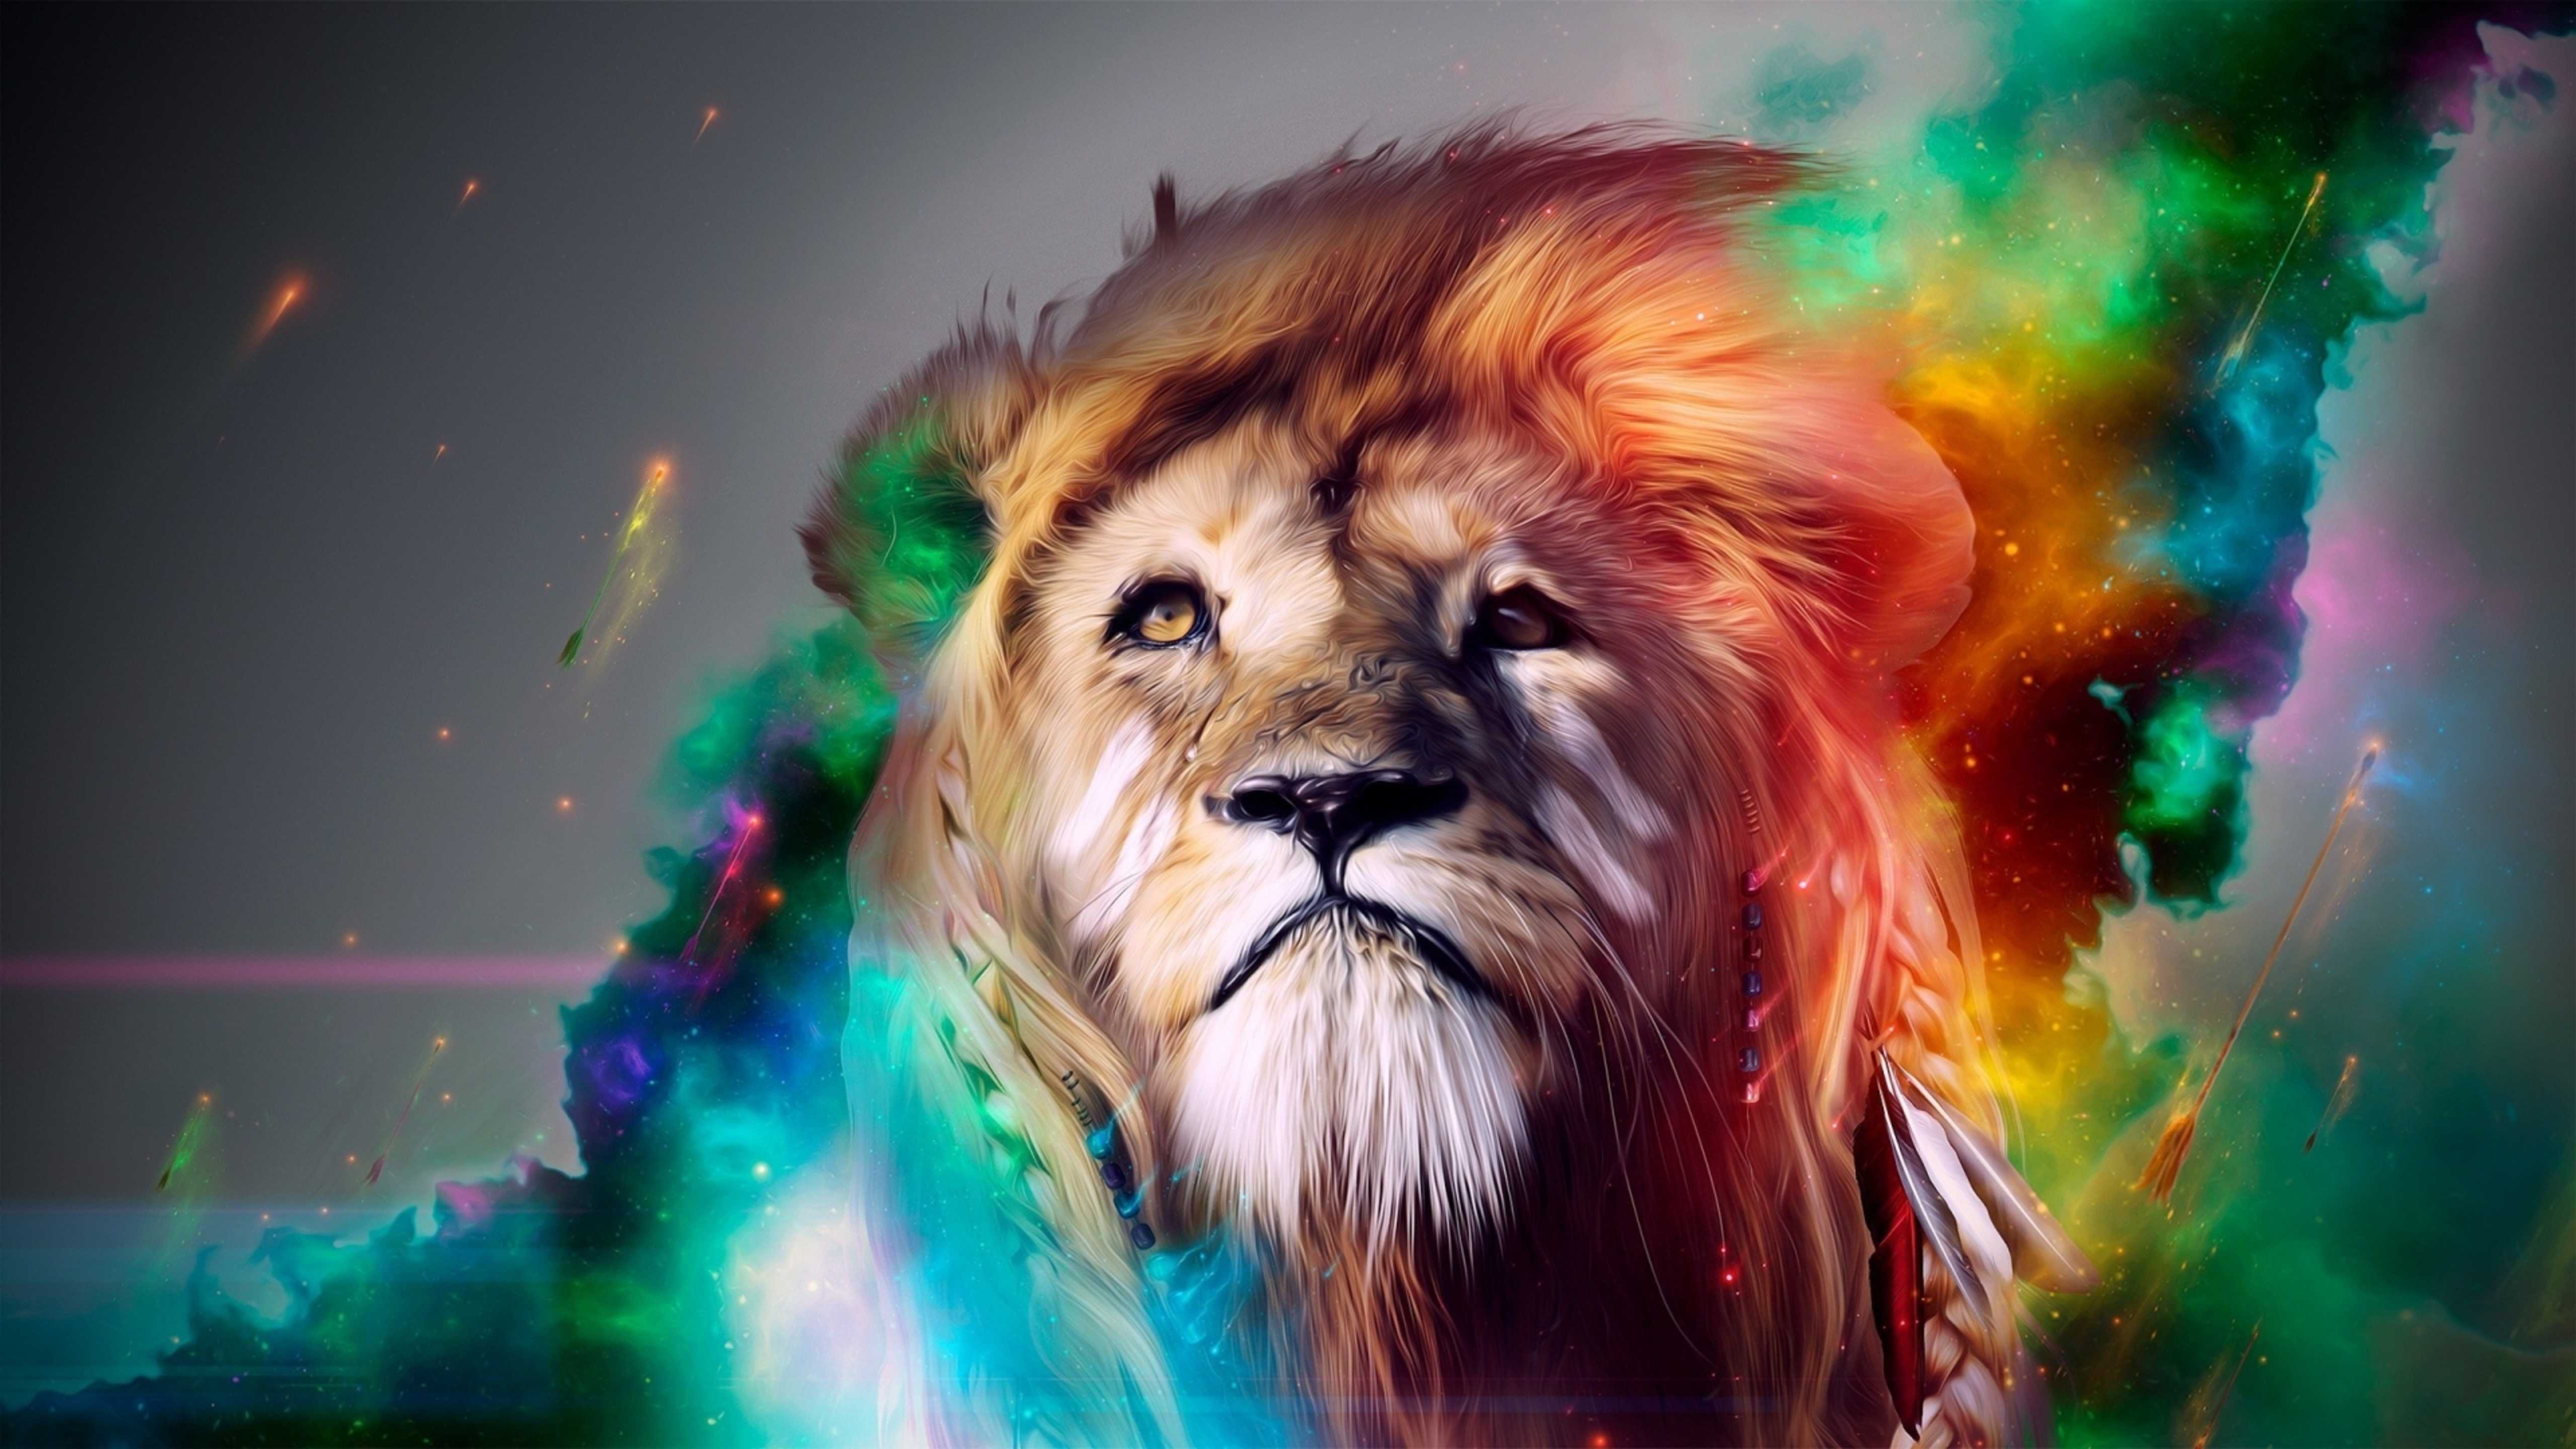 Wallpaper Abstract Rainbow Lion Creative